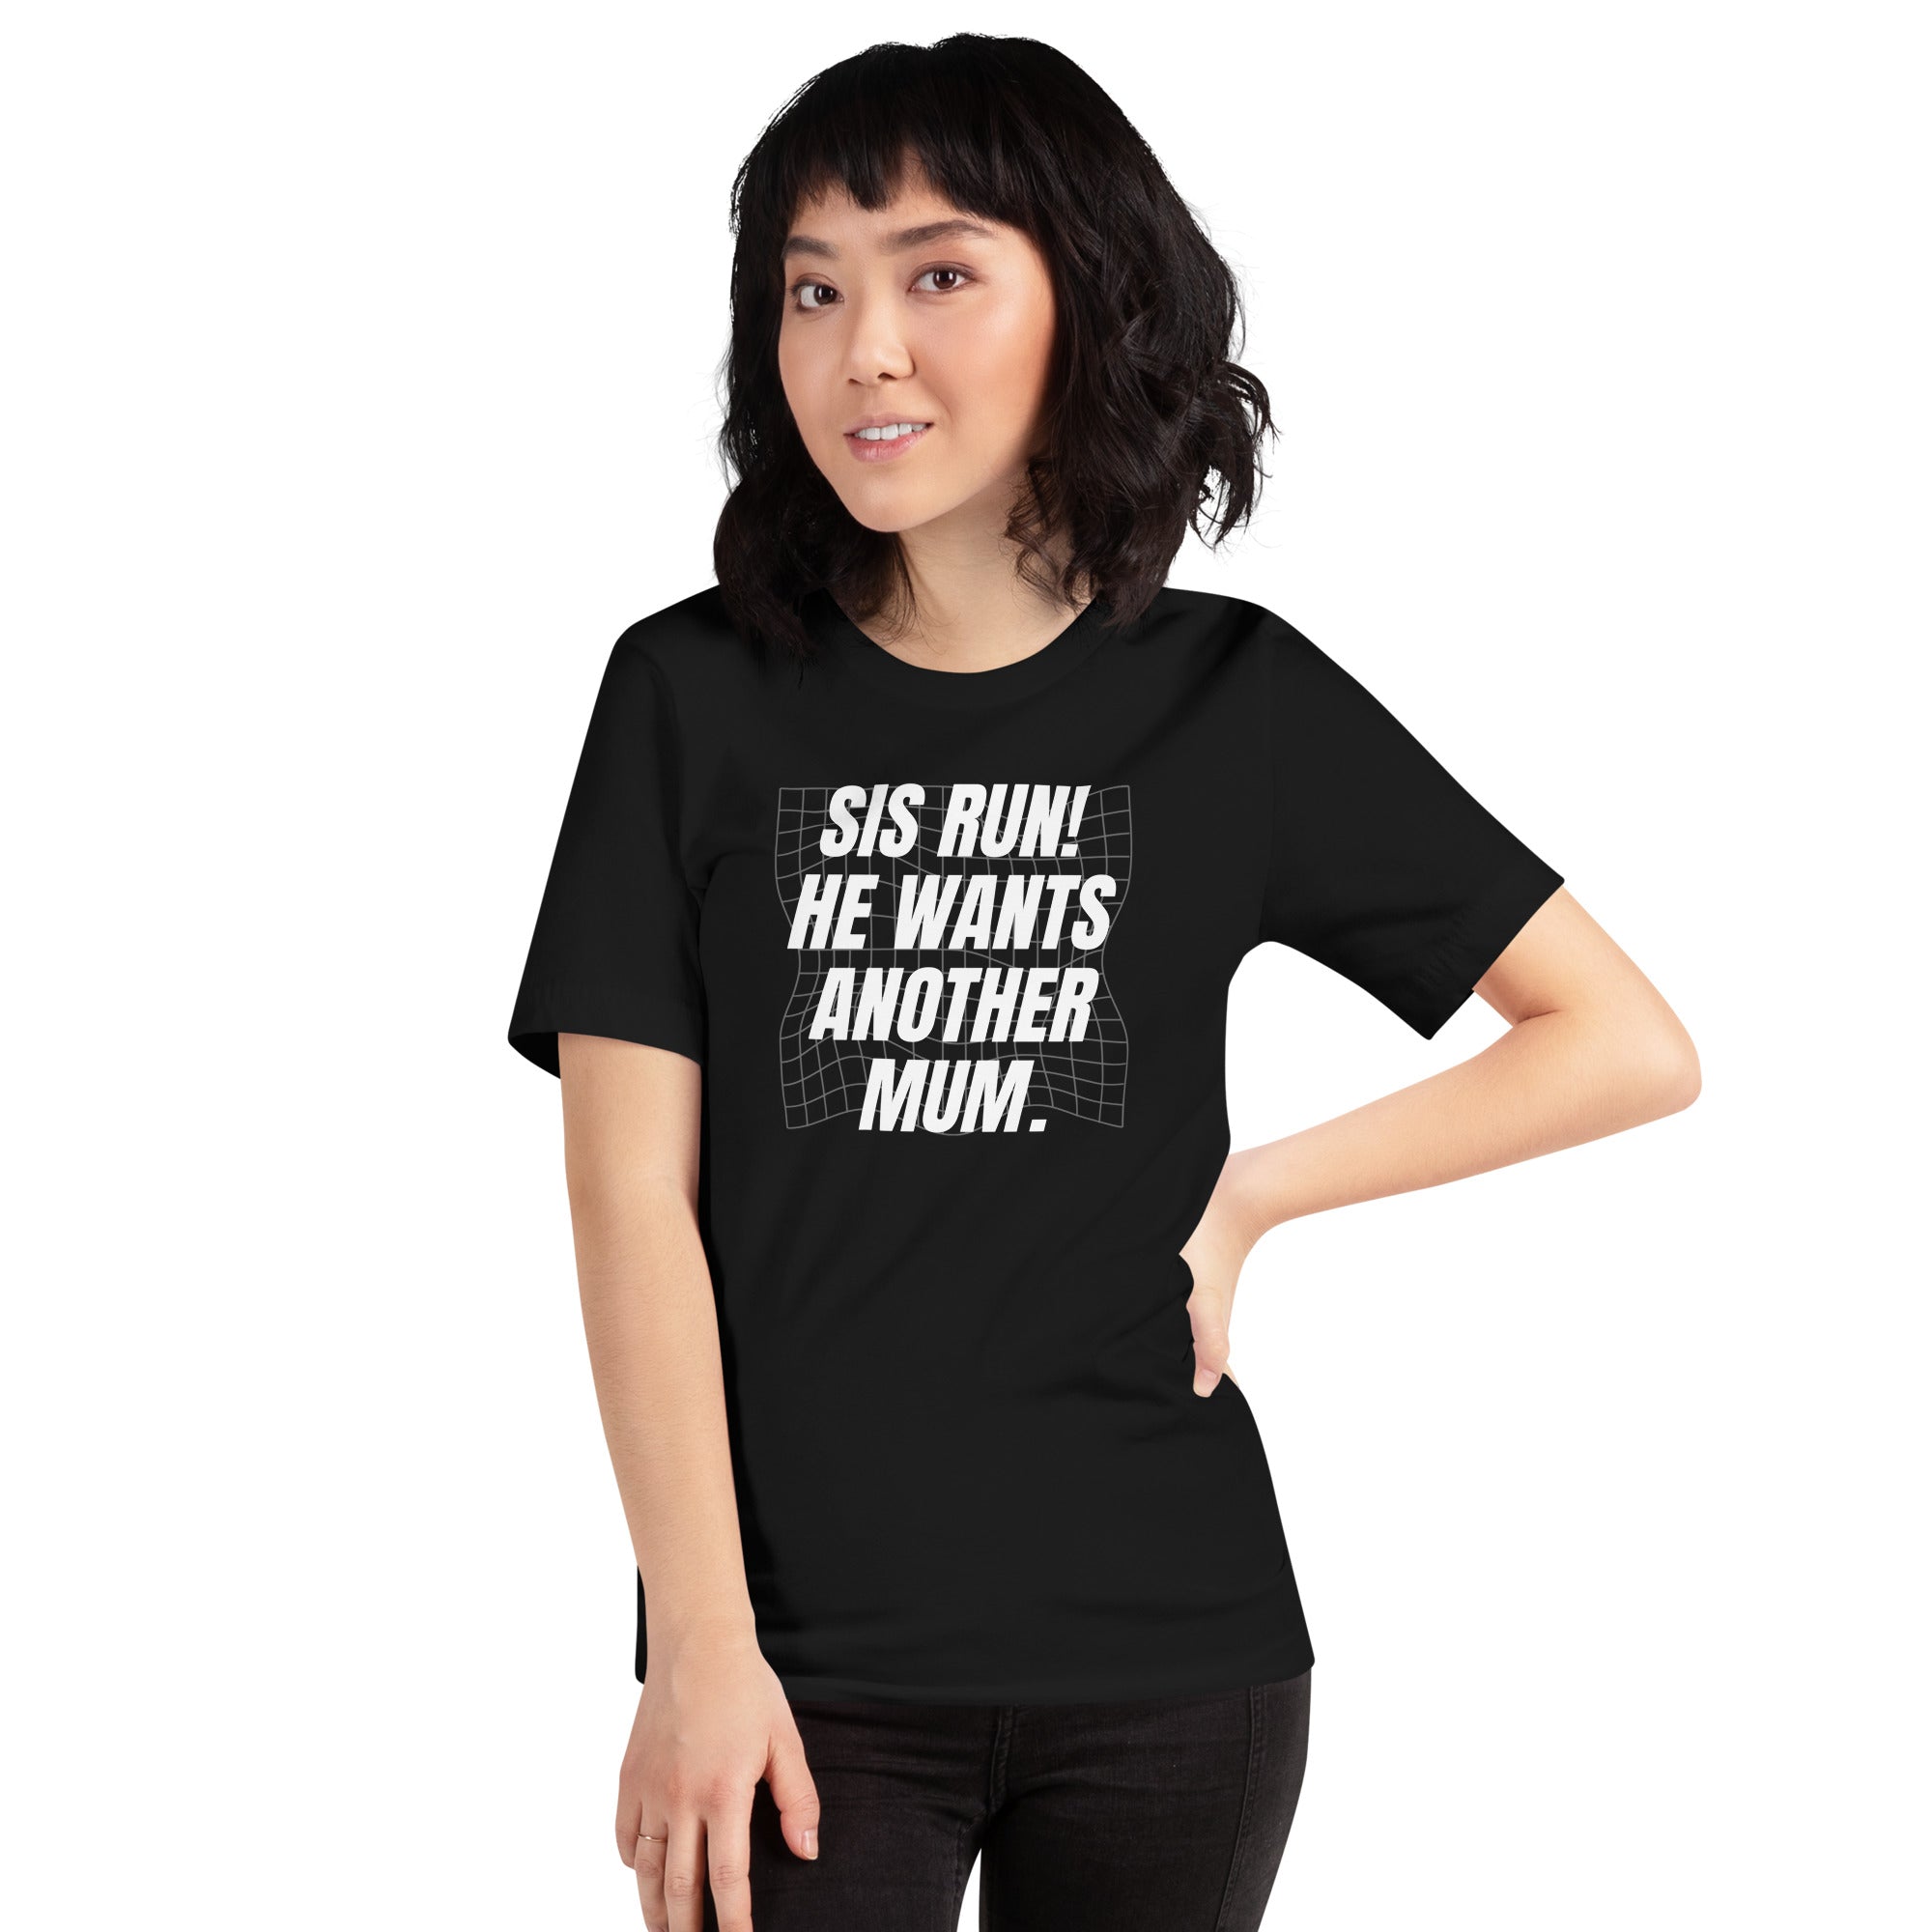 Sis Run! He Wants Another Mum. (UK/AU) Unisex Feminist T-shirt - Shop Women’s Rights T-shirts - Feminist Trash Store - Women’s Oversized Black Shirt